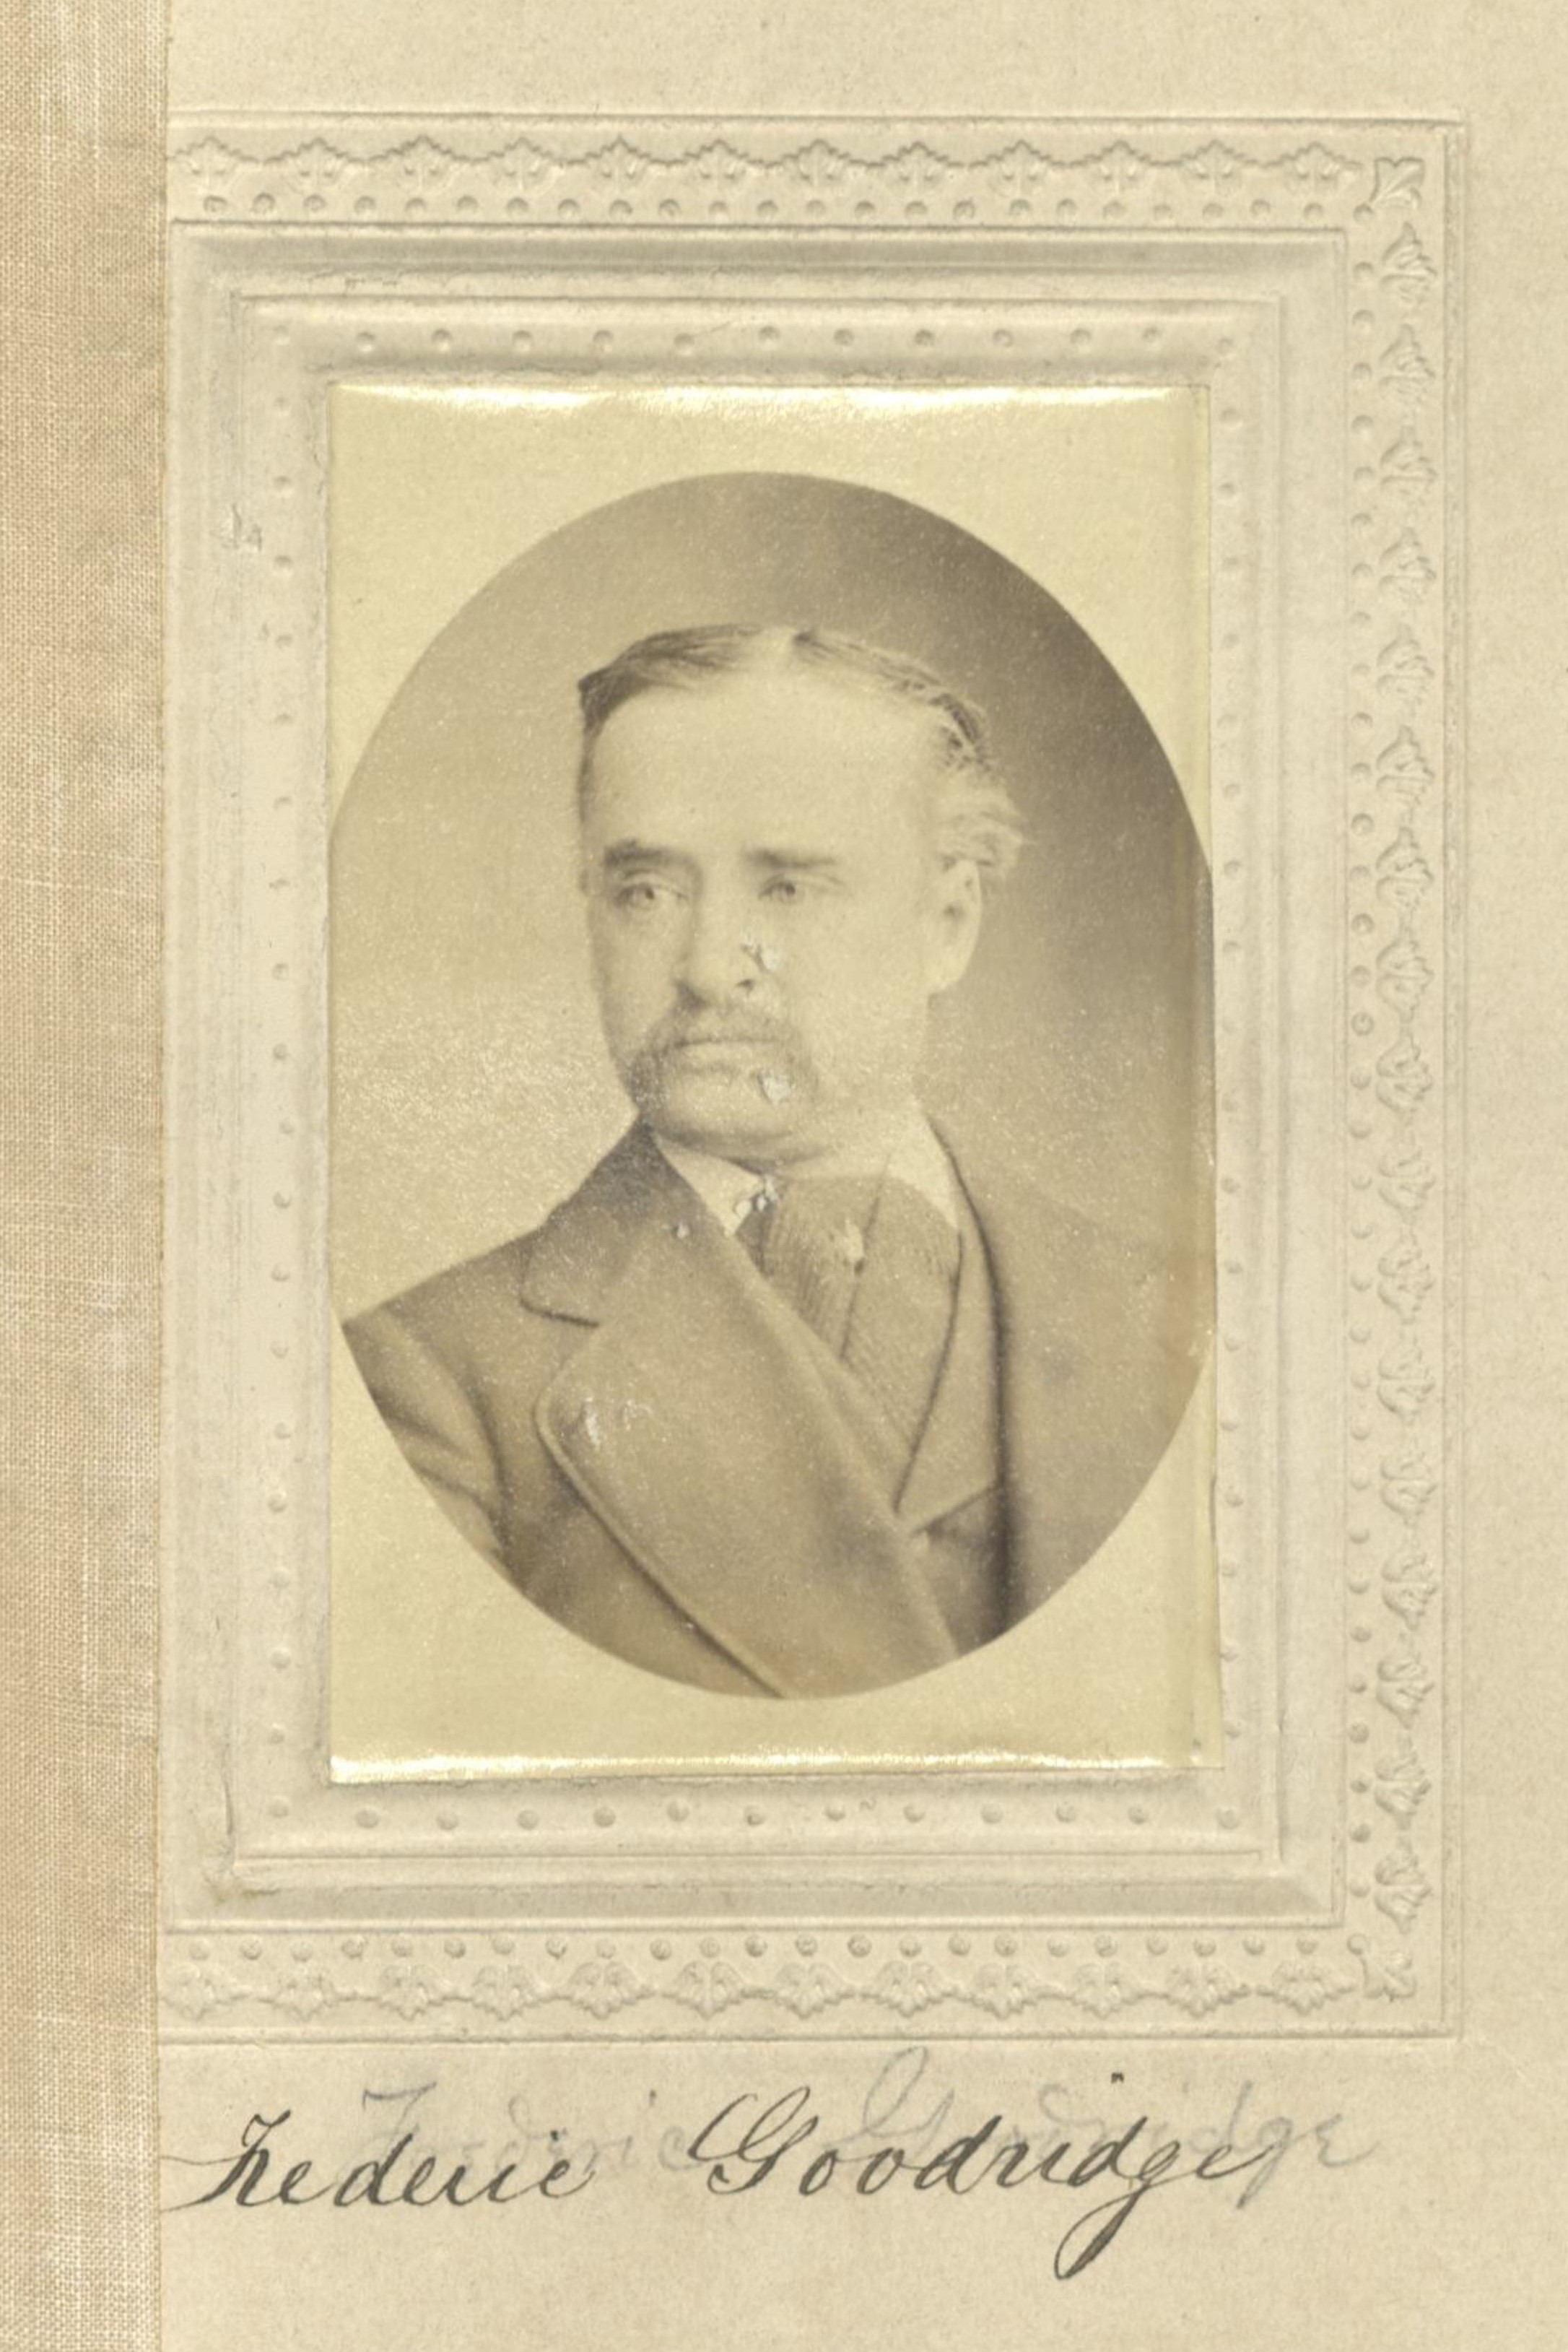 Member portrait of Frederic Goodridge